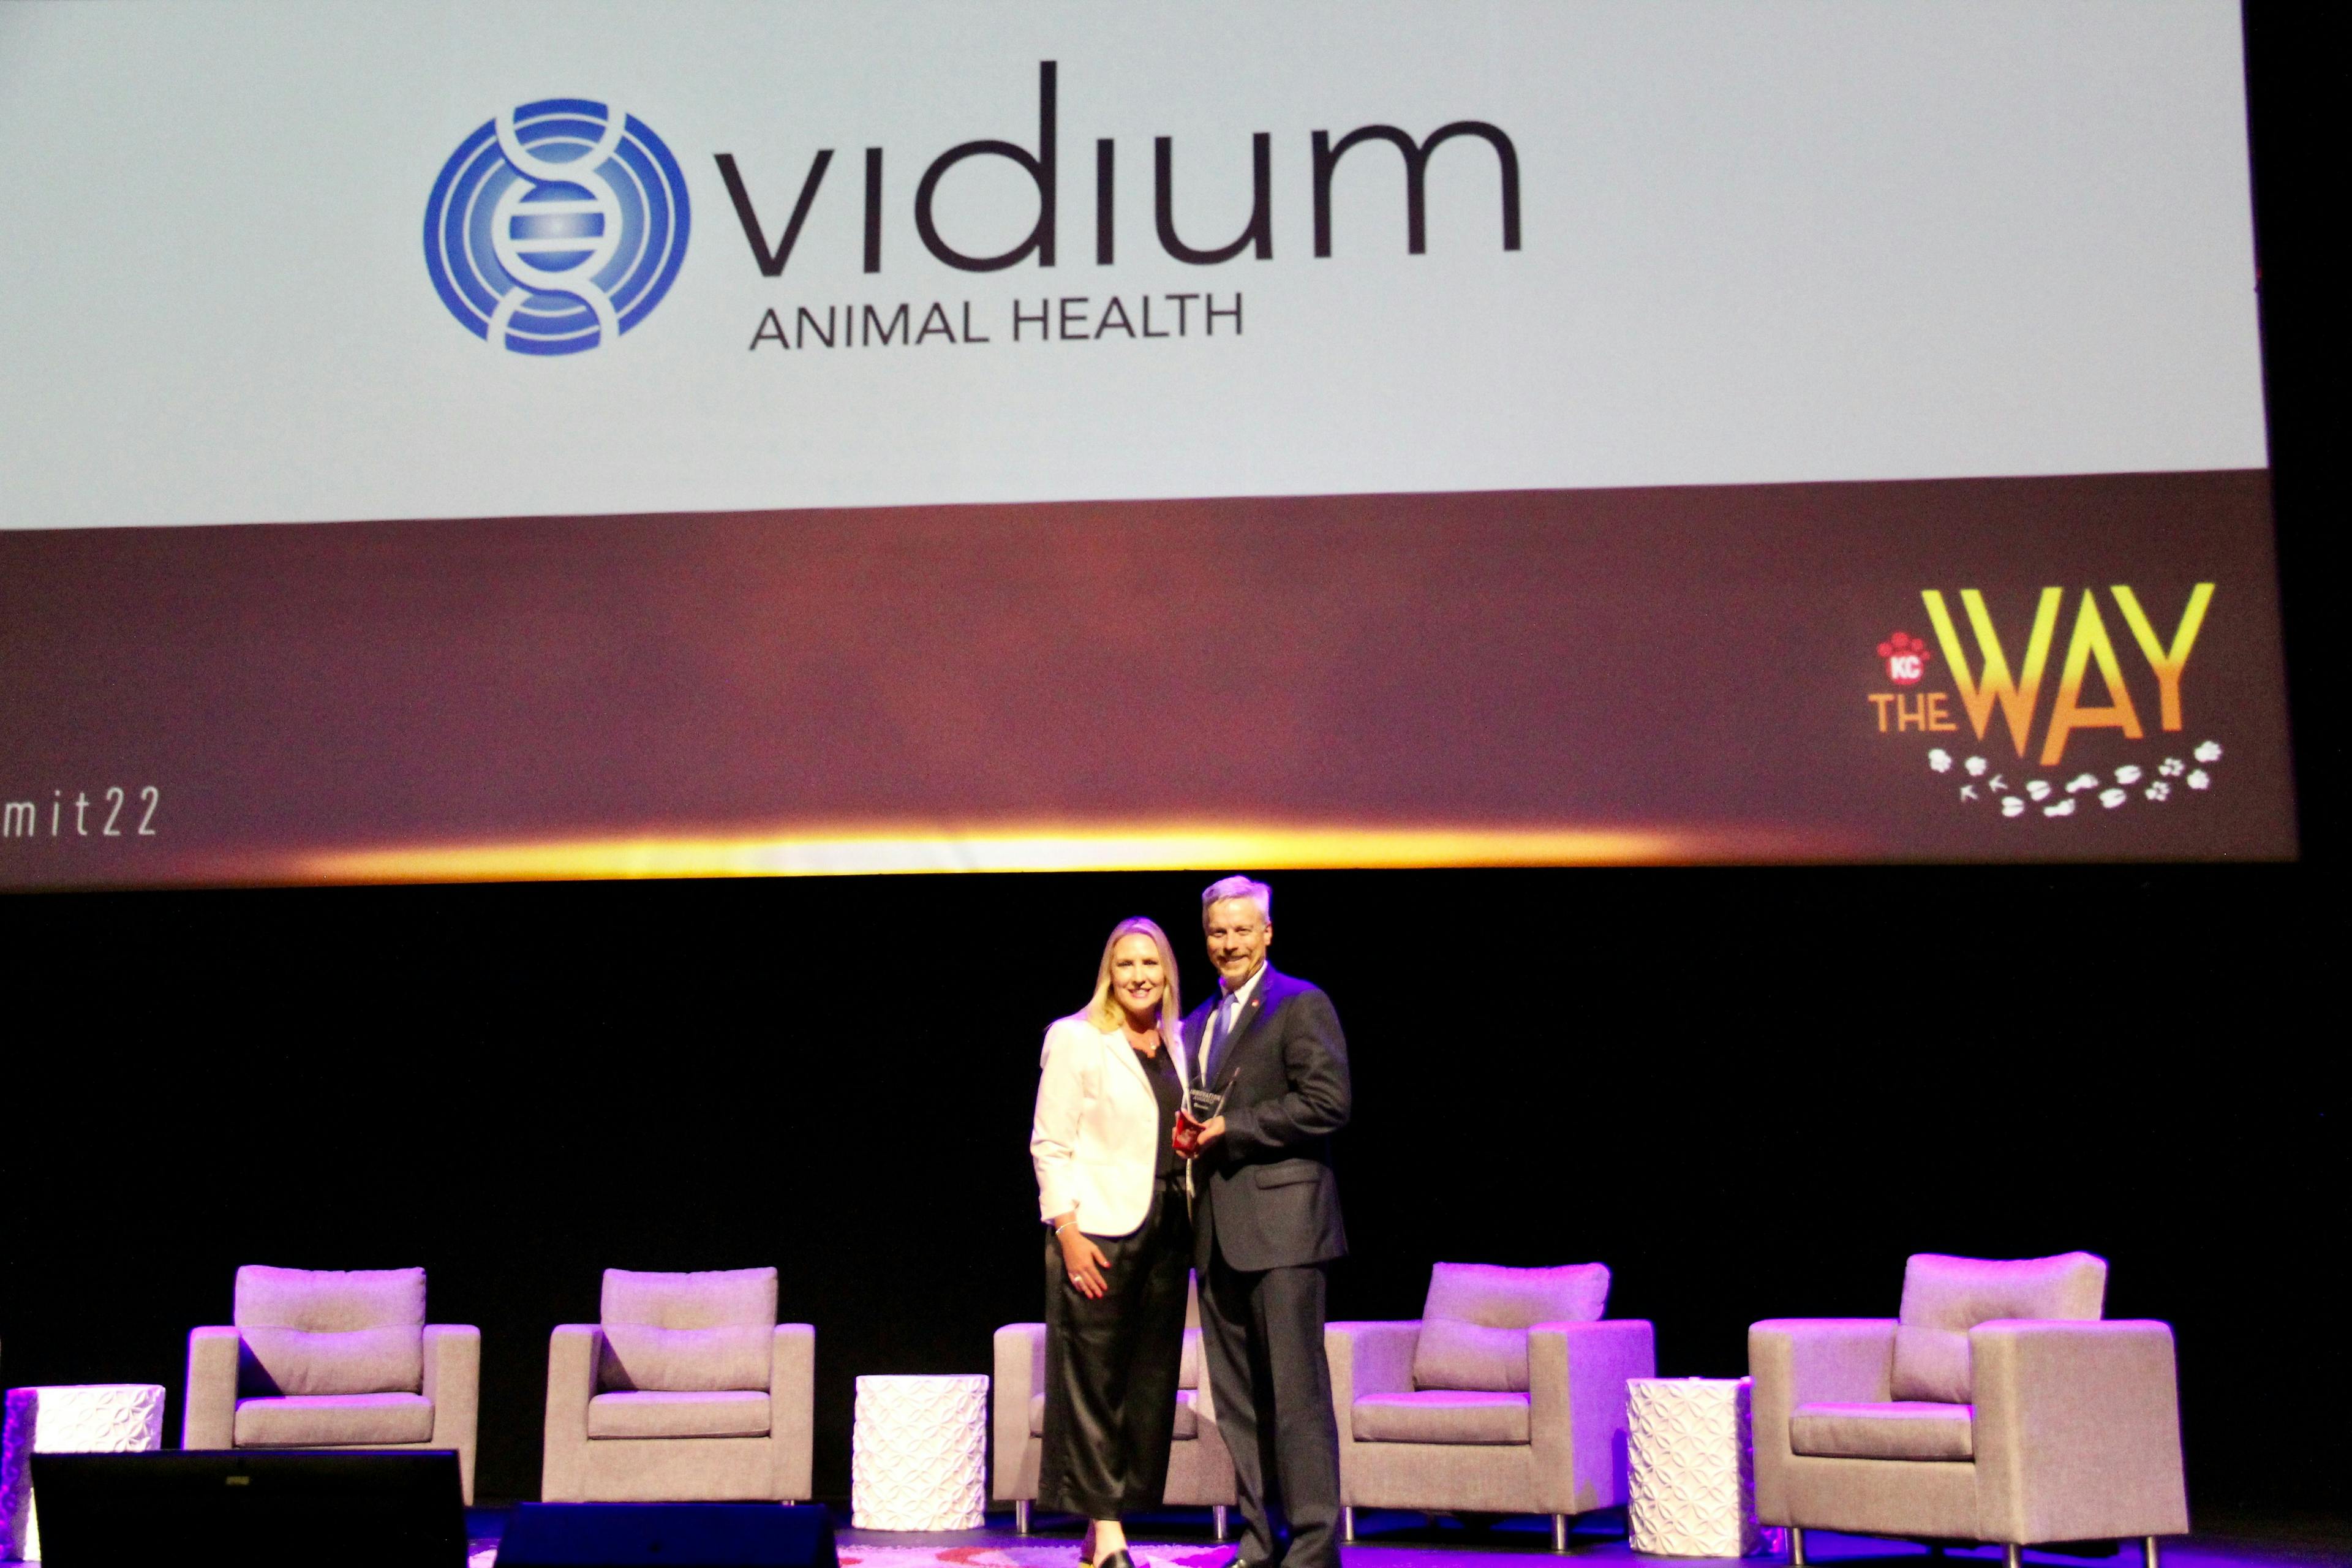 Vidium Animal Health receives Innovation Award at Animal Health Summit